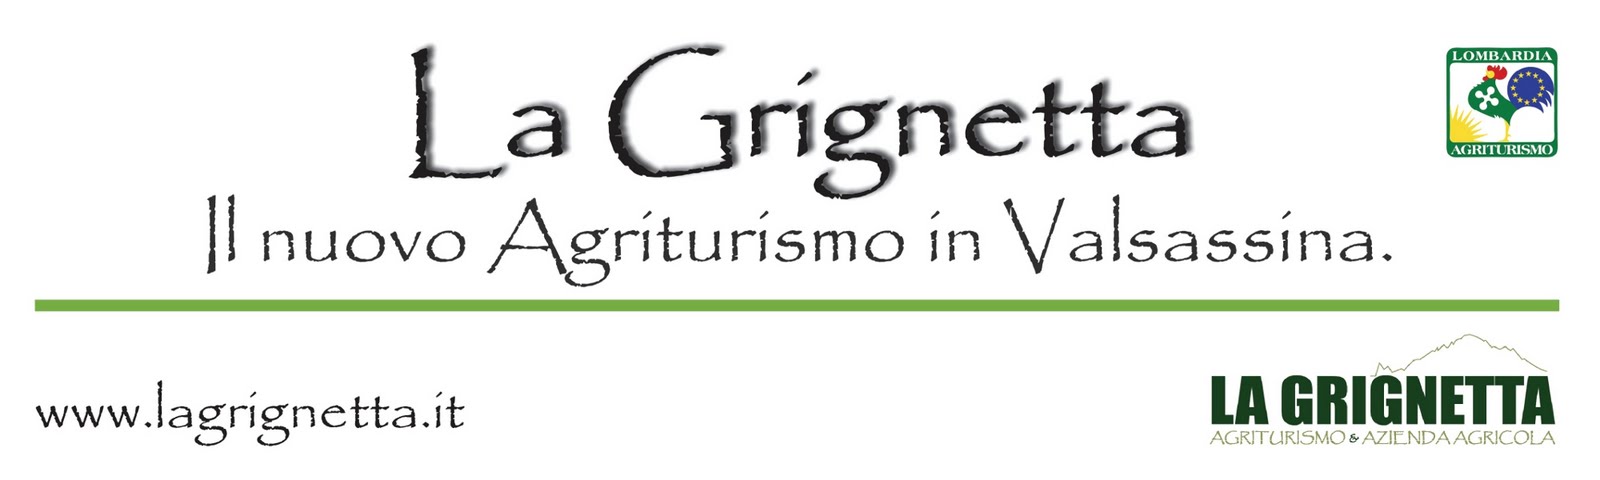 La Grignetta Agriturismo & Azienda agricola